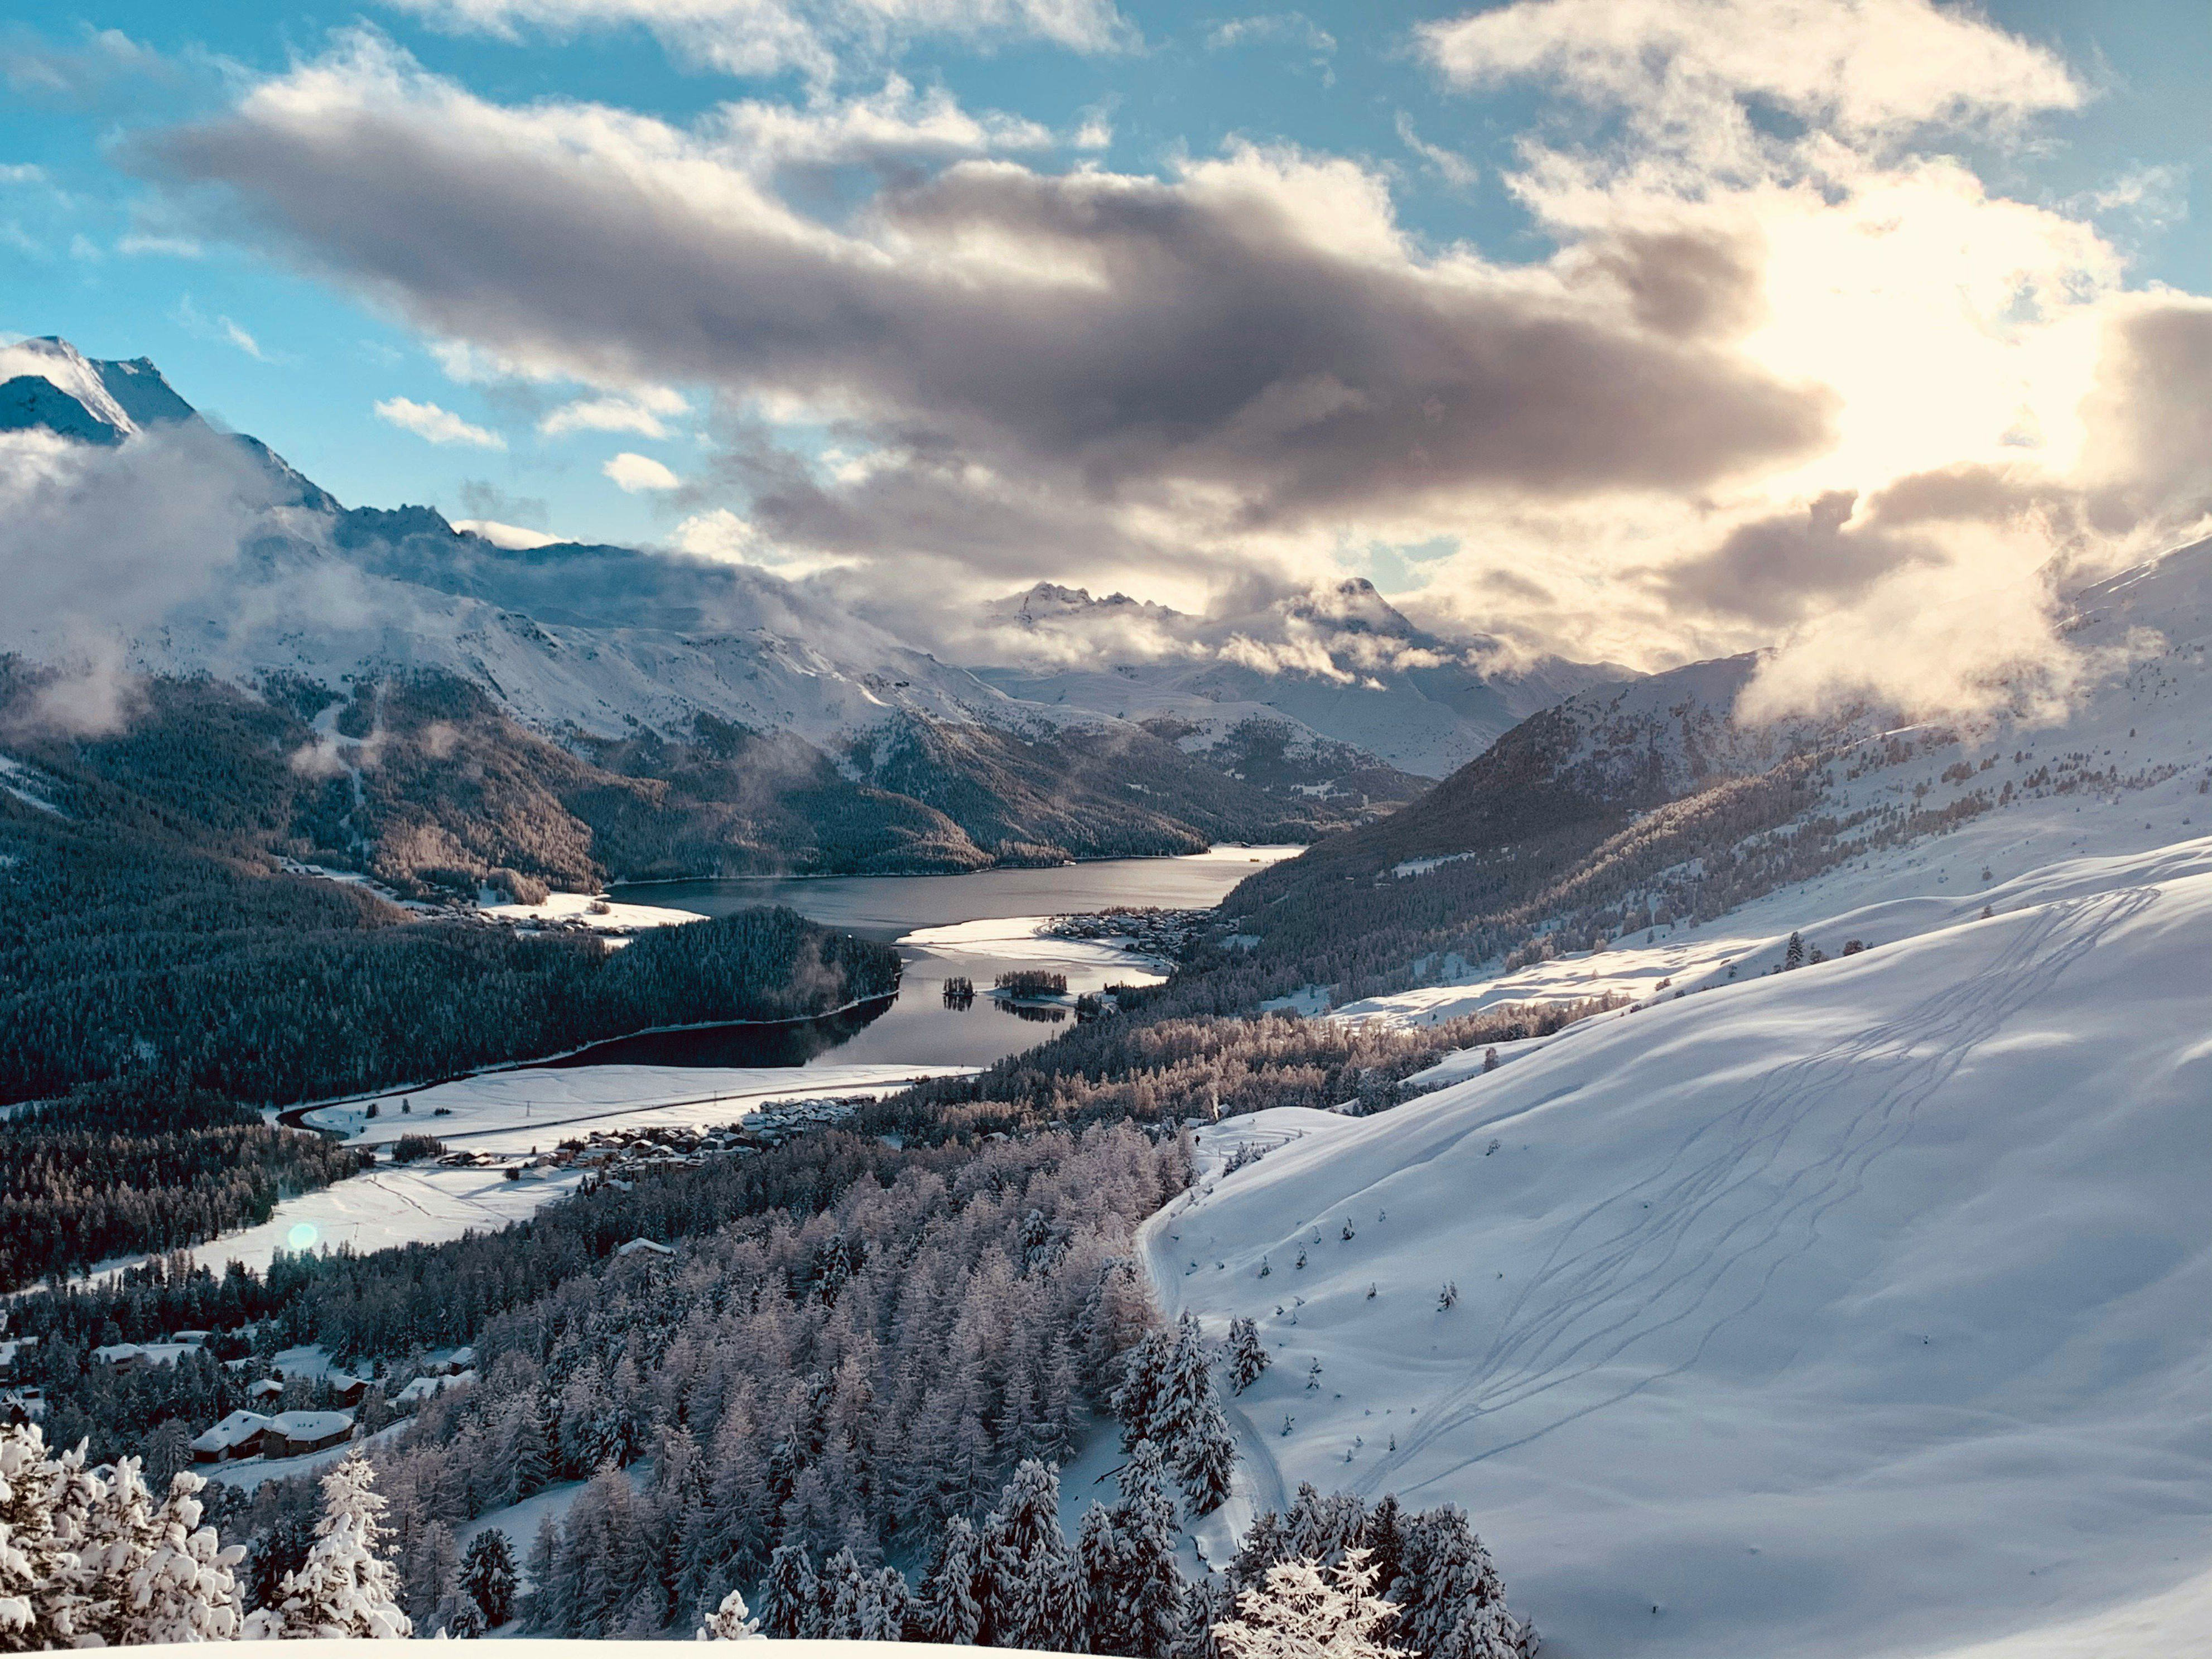 five luxury hotels in europe's major ski resorts reopening soon